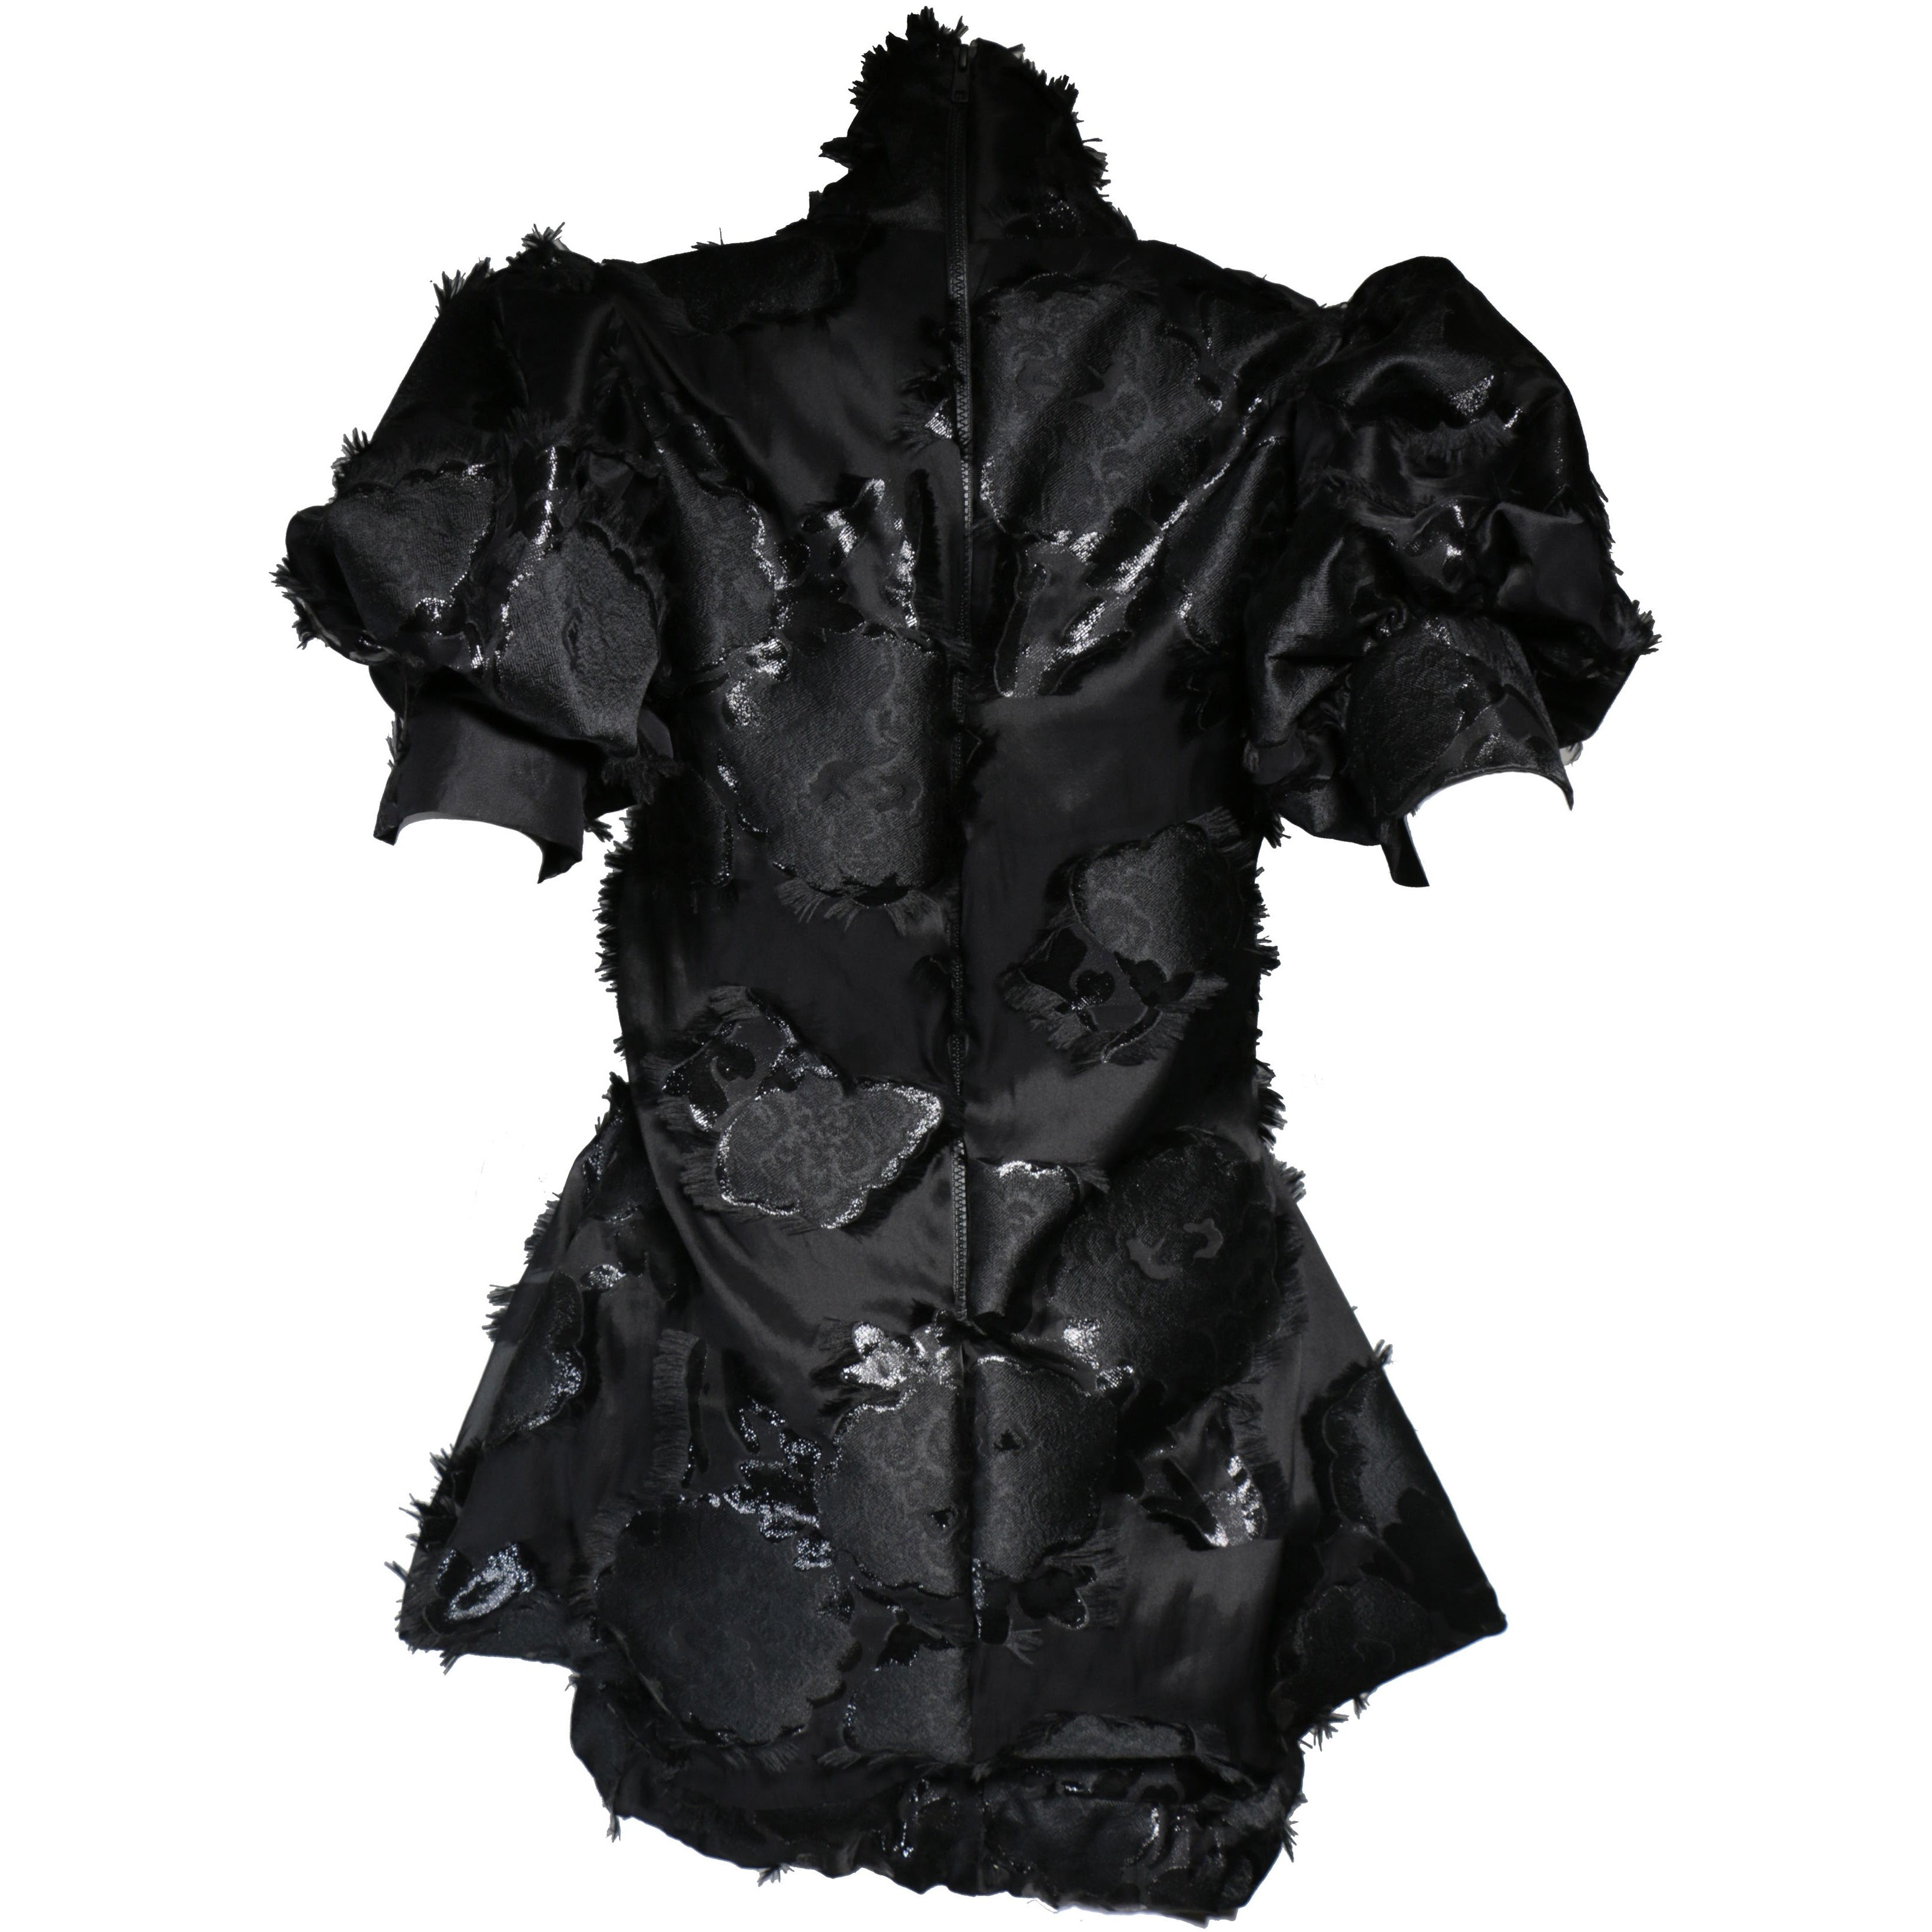 Black couture dress